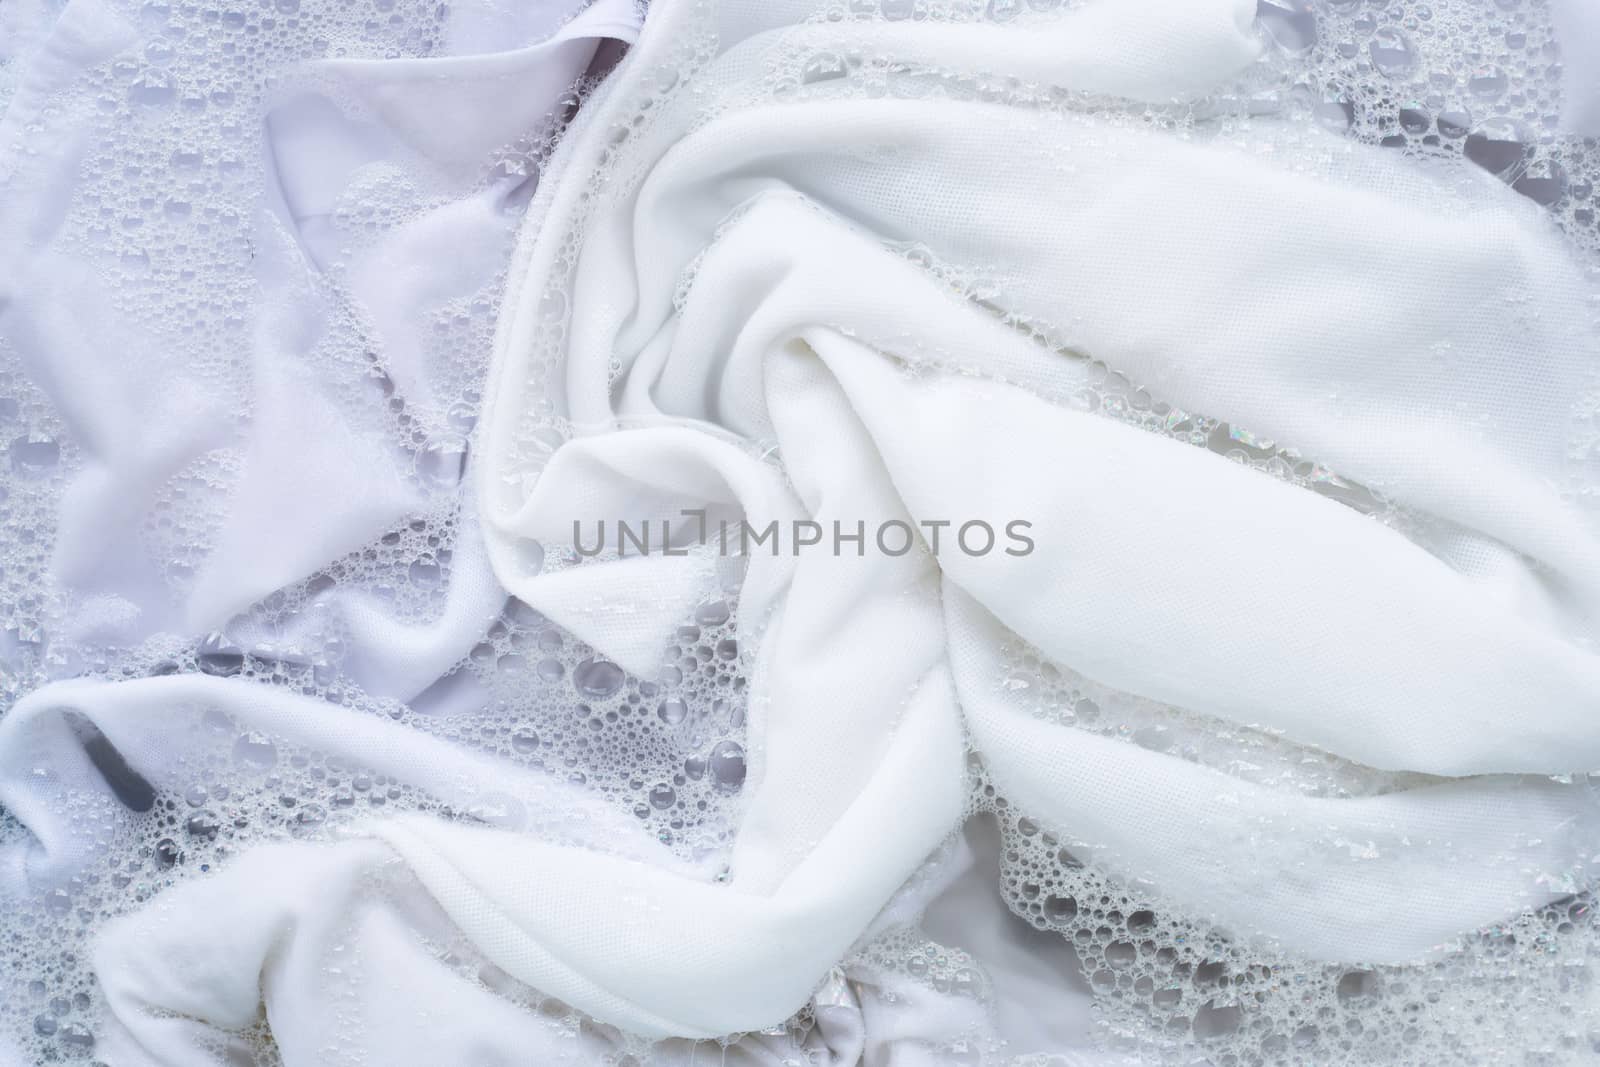 Shirt soak in powder detergent water dissolution. Laundry concep by Bowonpat